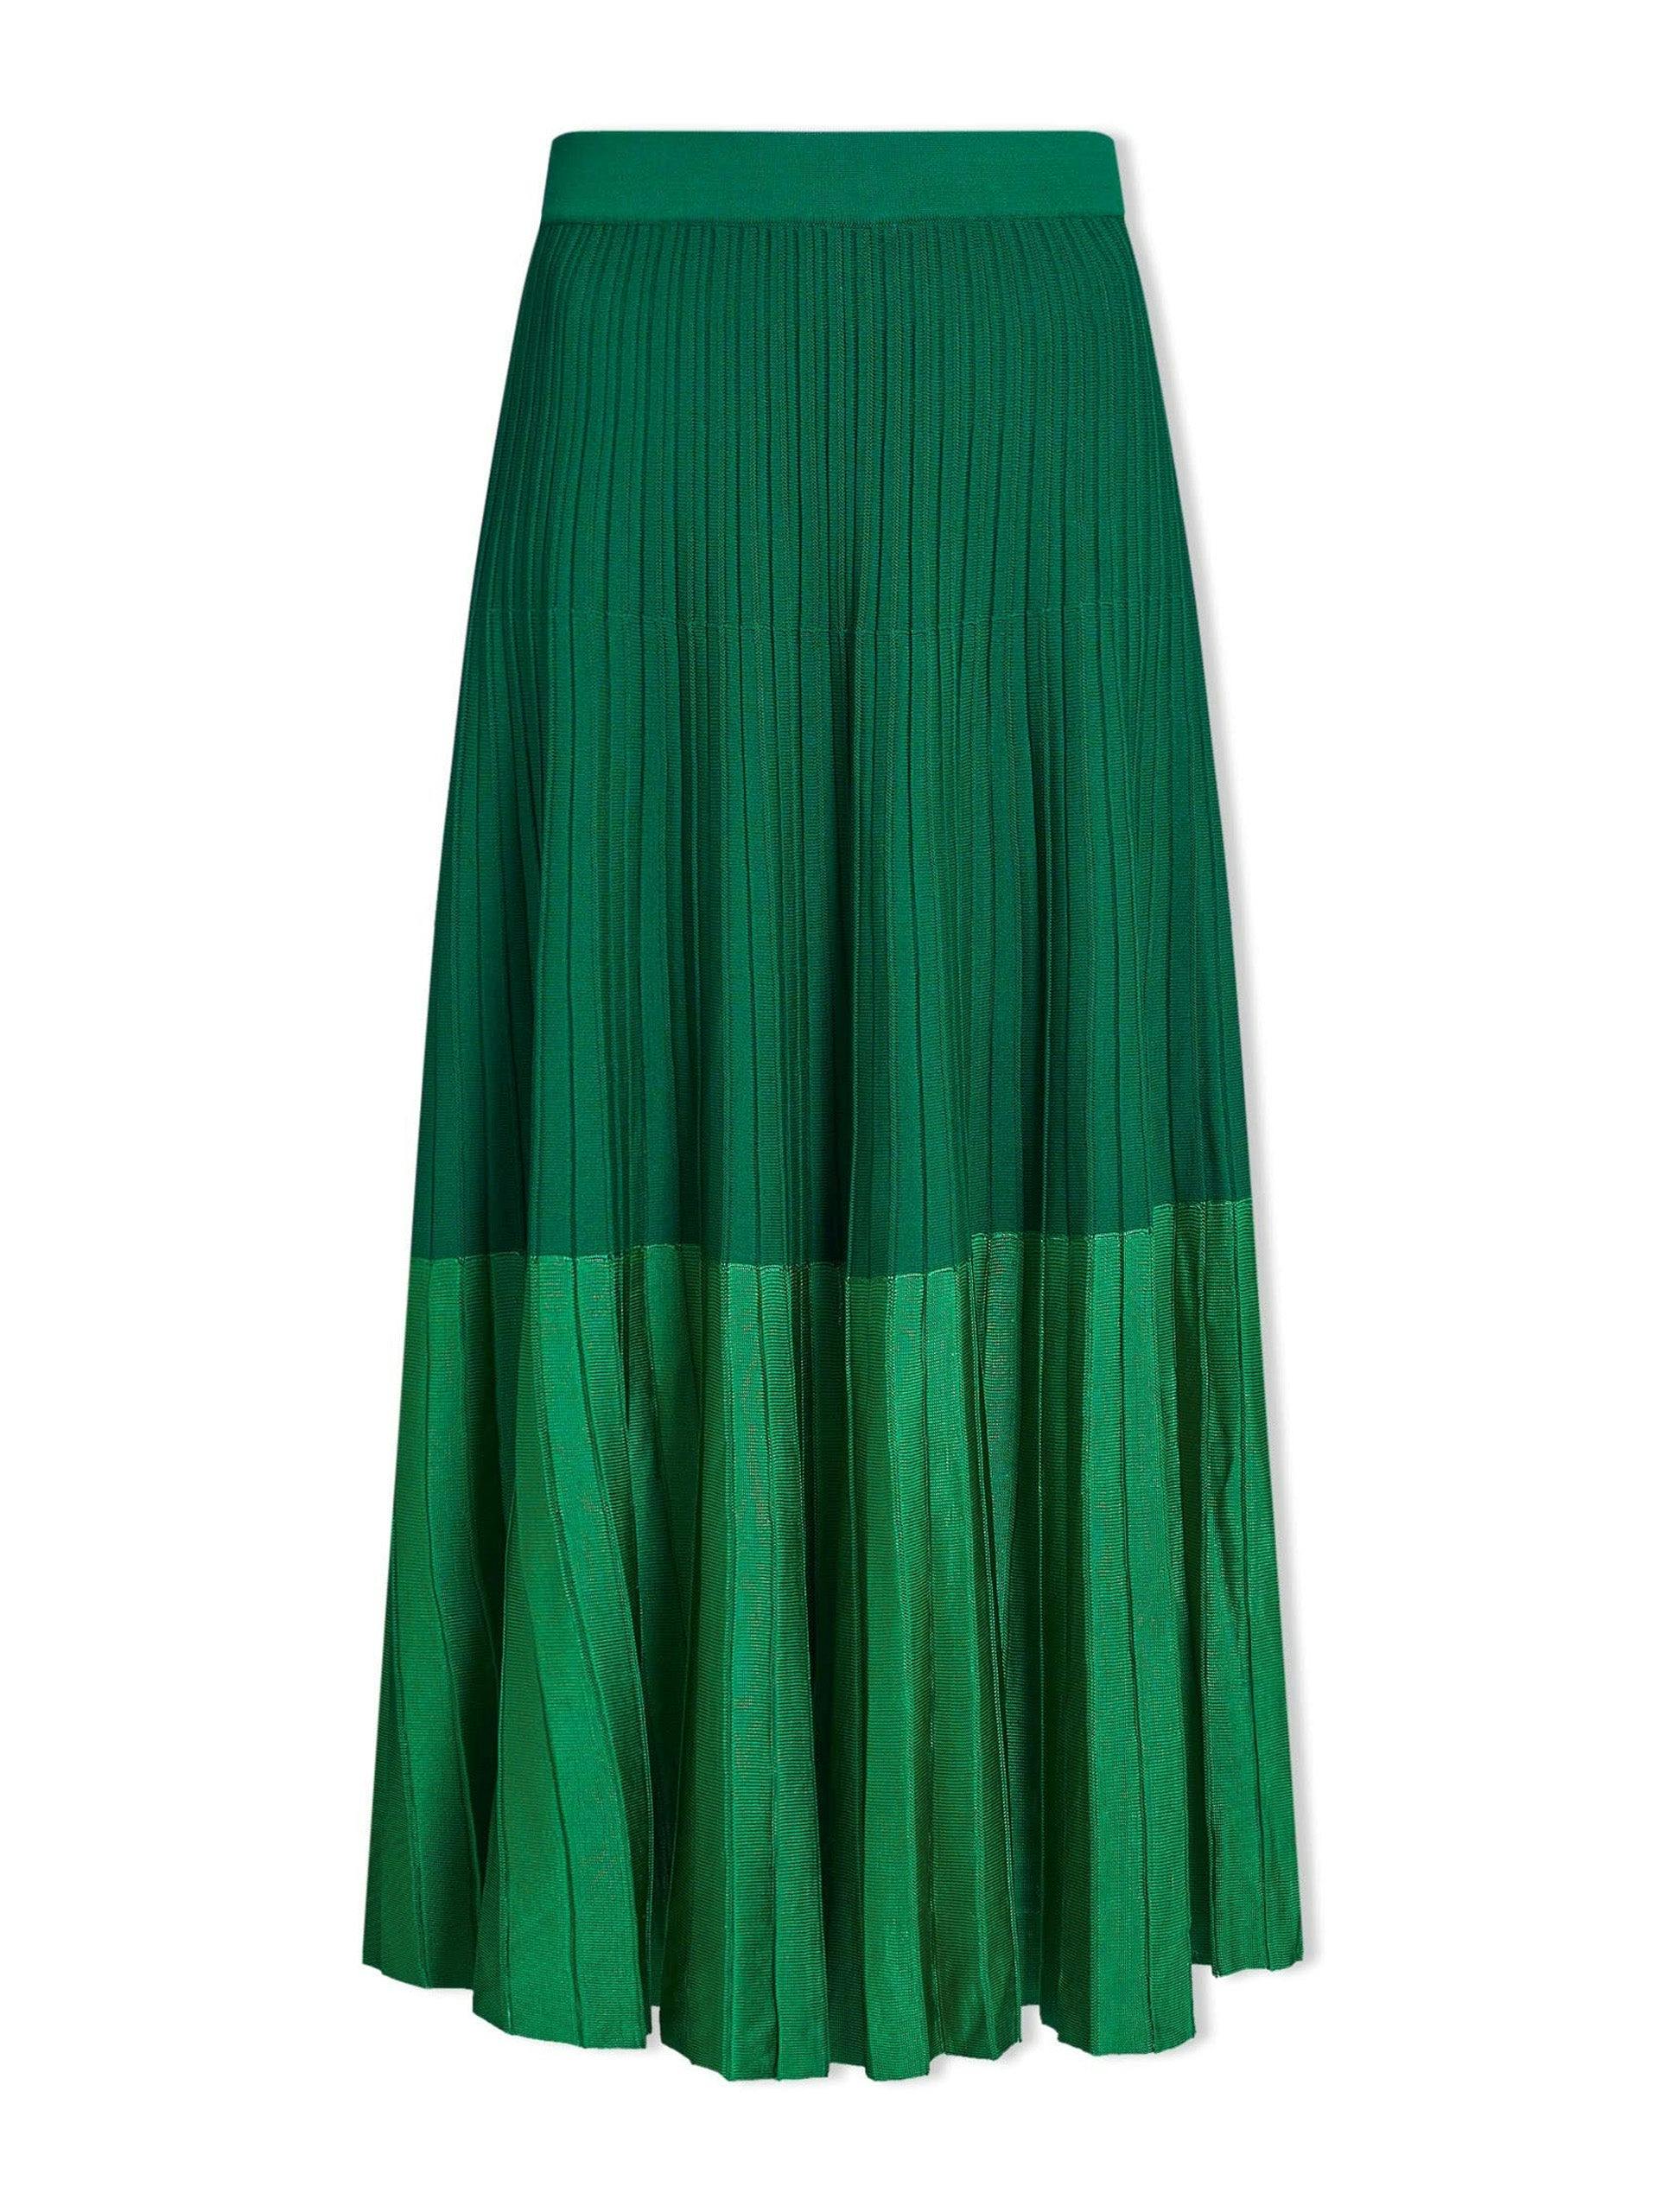 Emerald green Colette contrast hem skirt